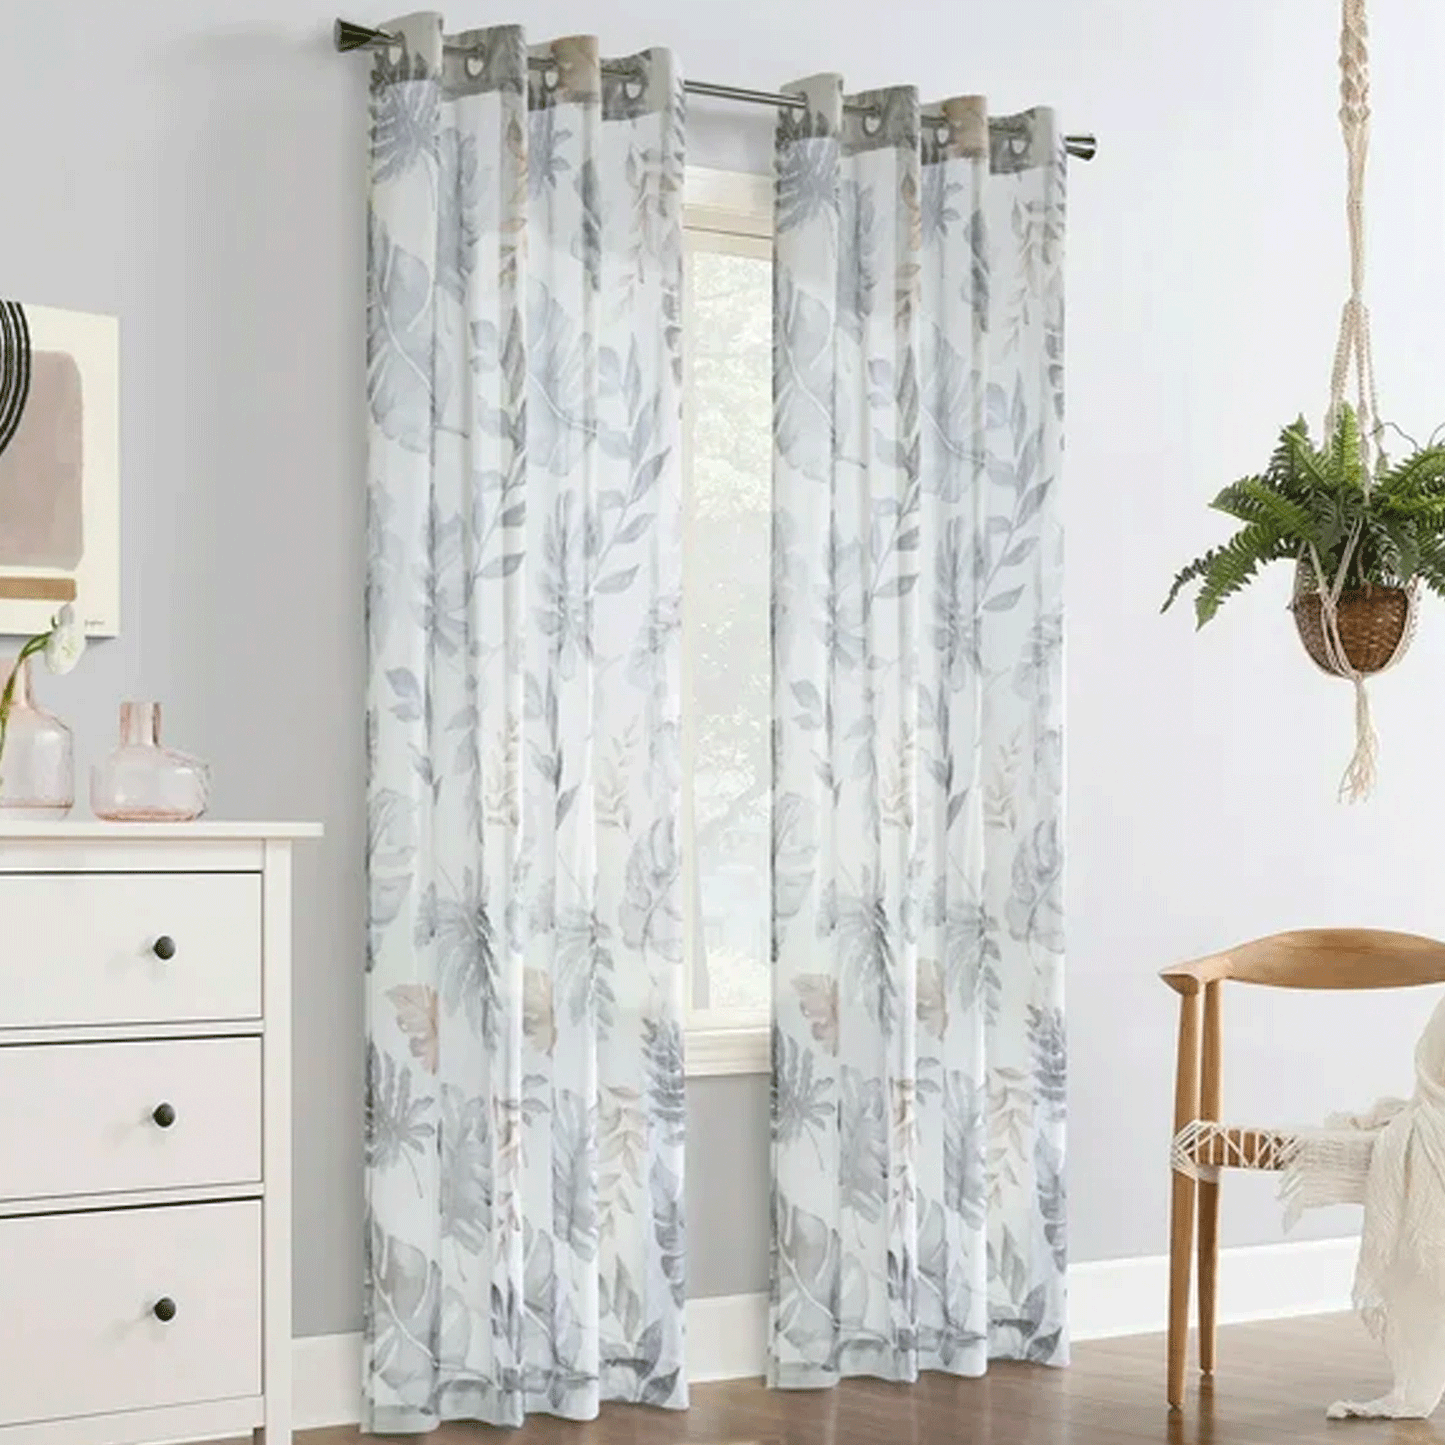 Alba Sheer Grommet Curtain Panel